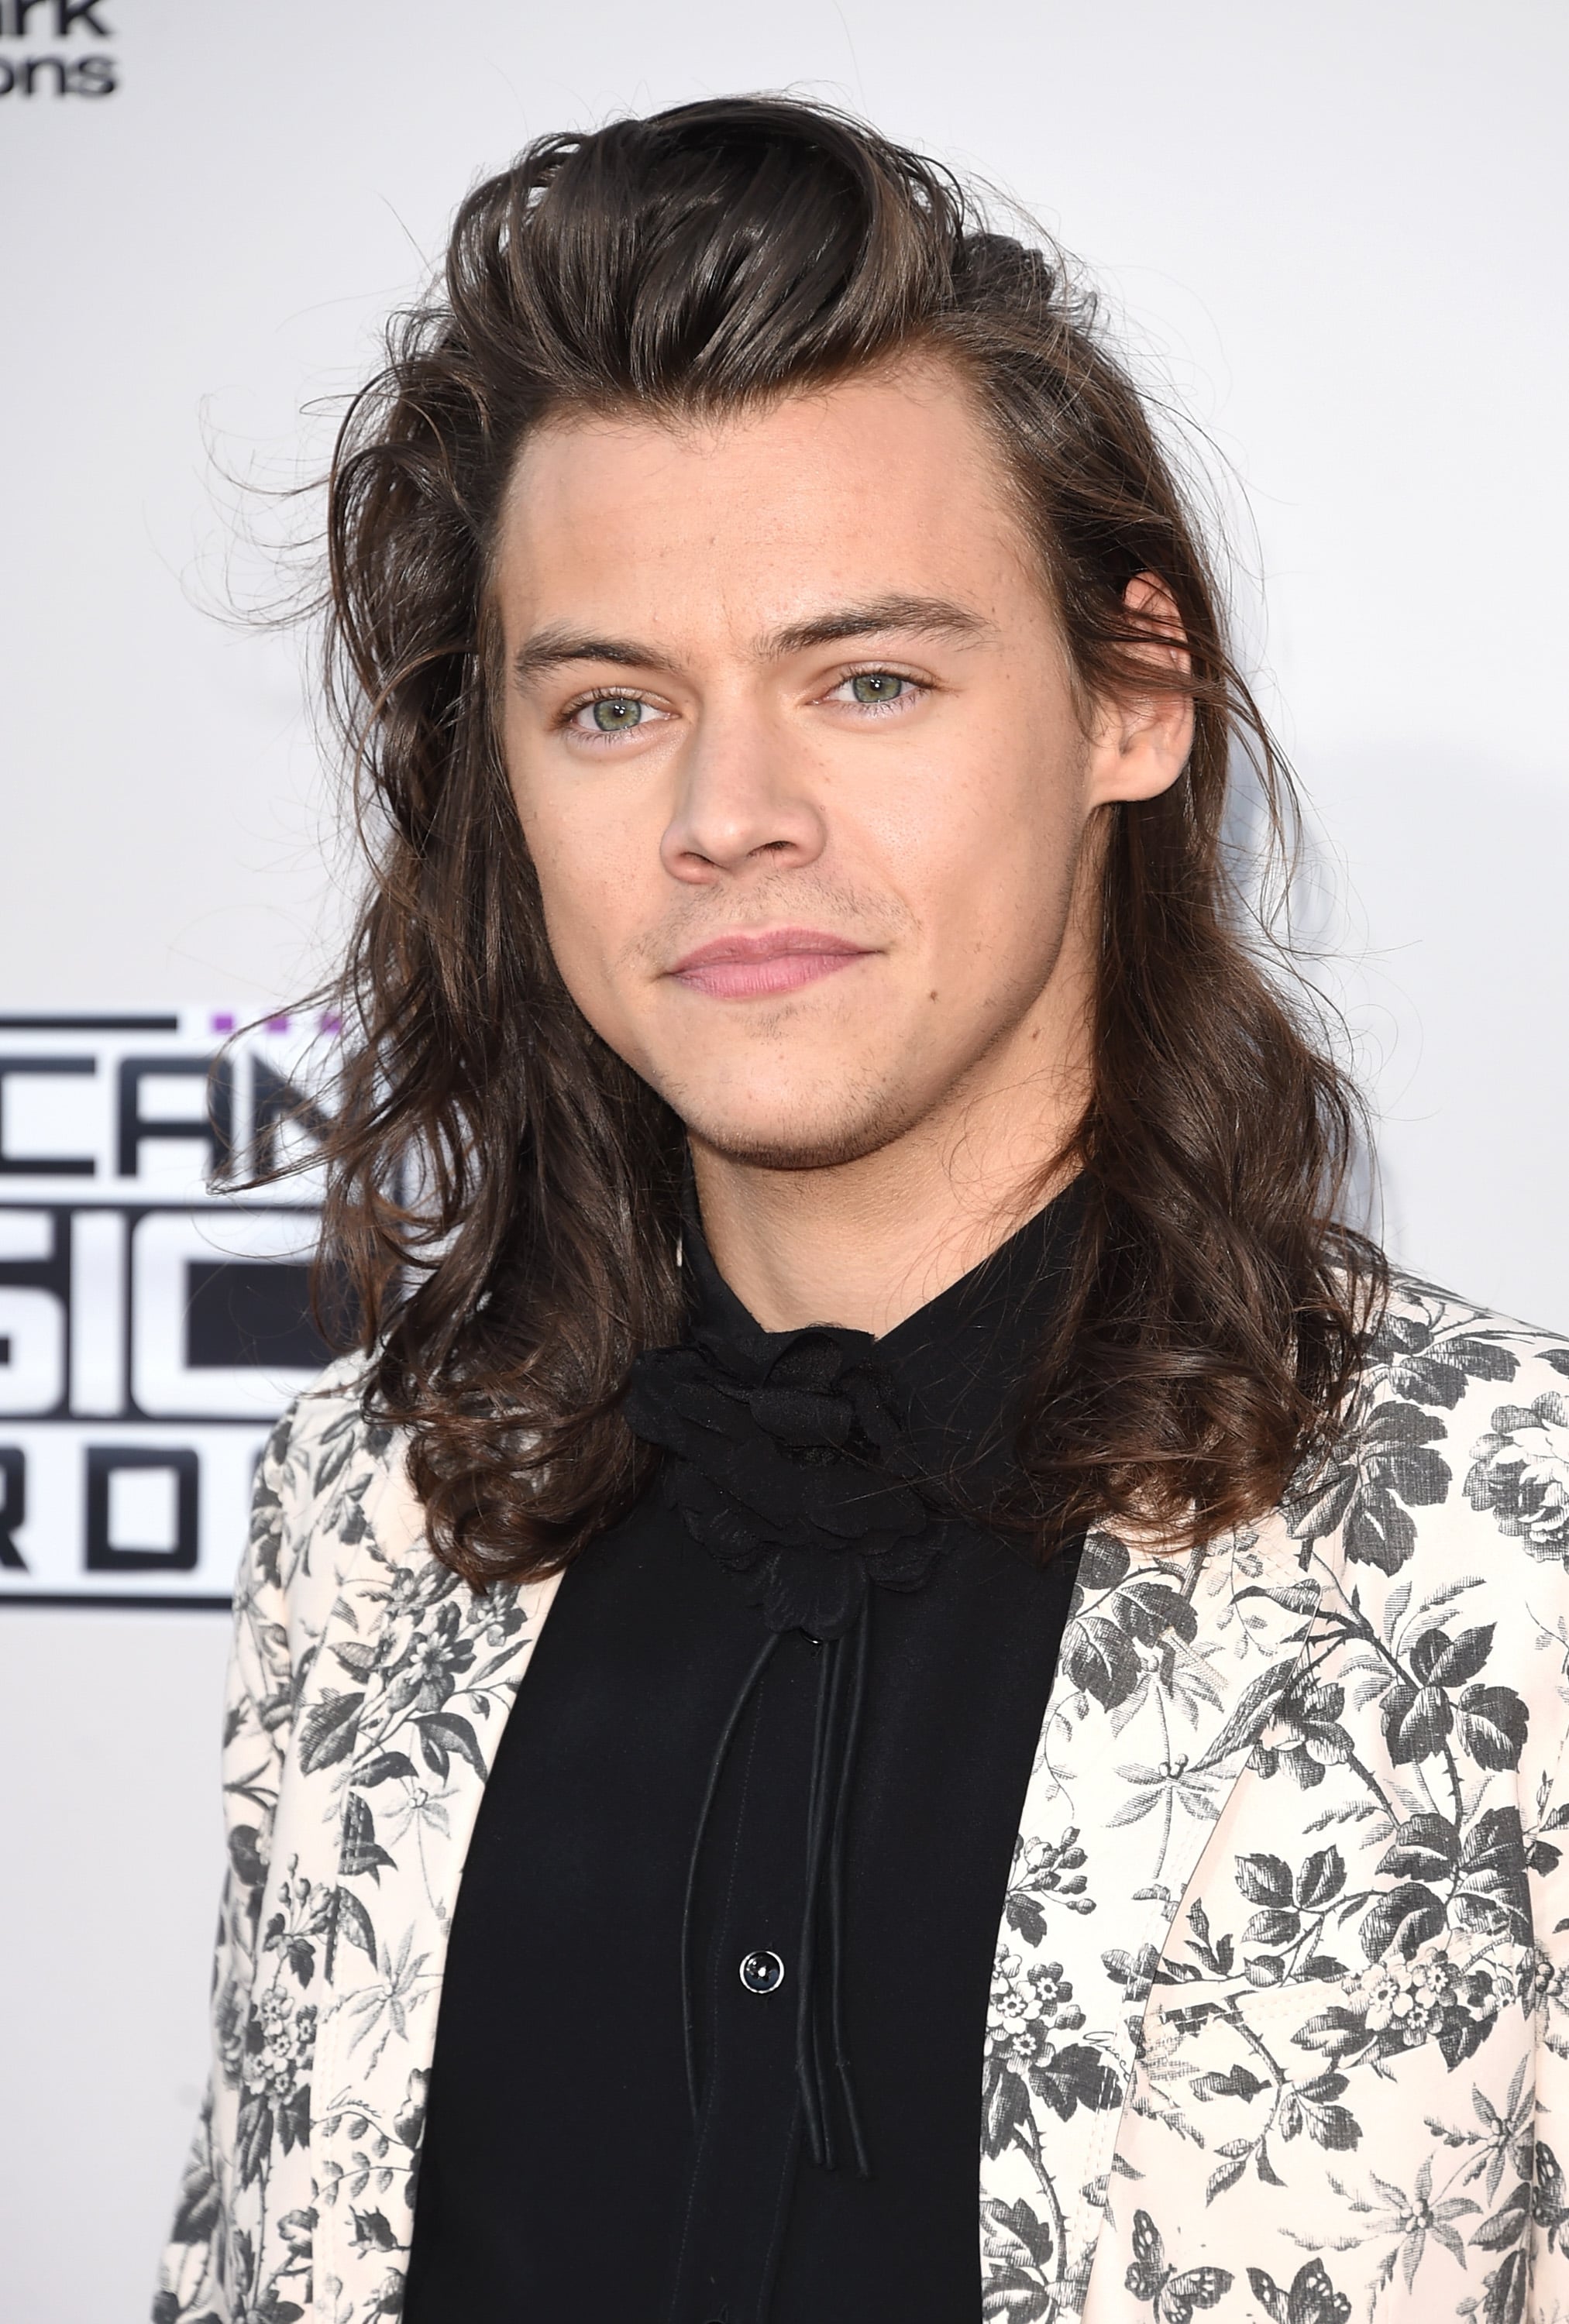 Harry Styles Hair at American Music Awards 2015 | POPSUGAR ...